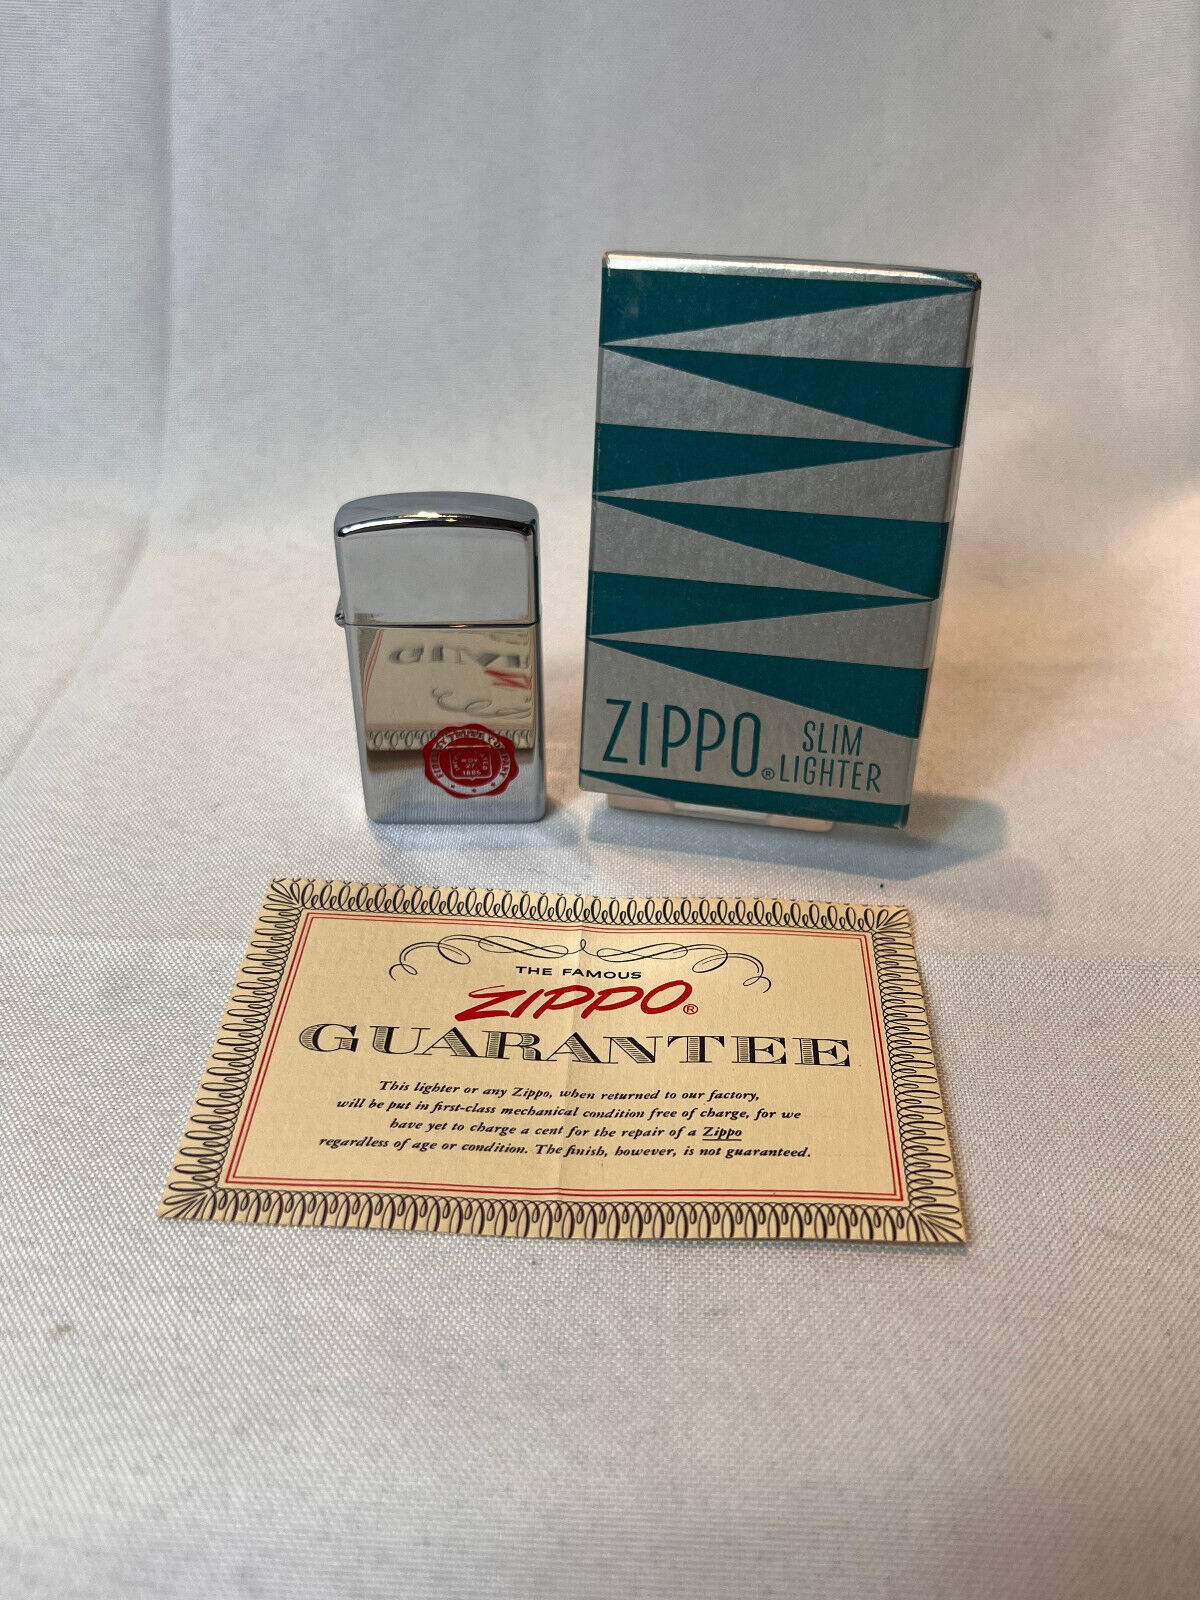 1958 Zippo Slim Lighter Fidelity Trust Company Polished Chrome In Original Box - $98.95